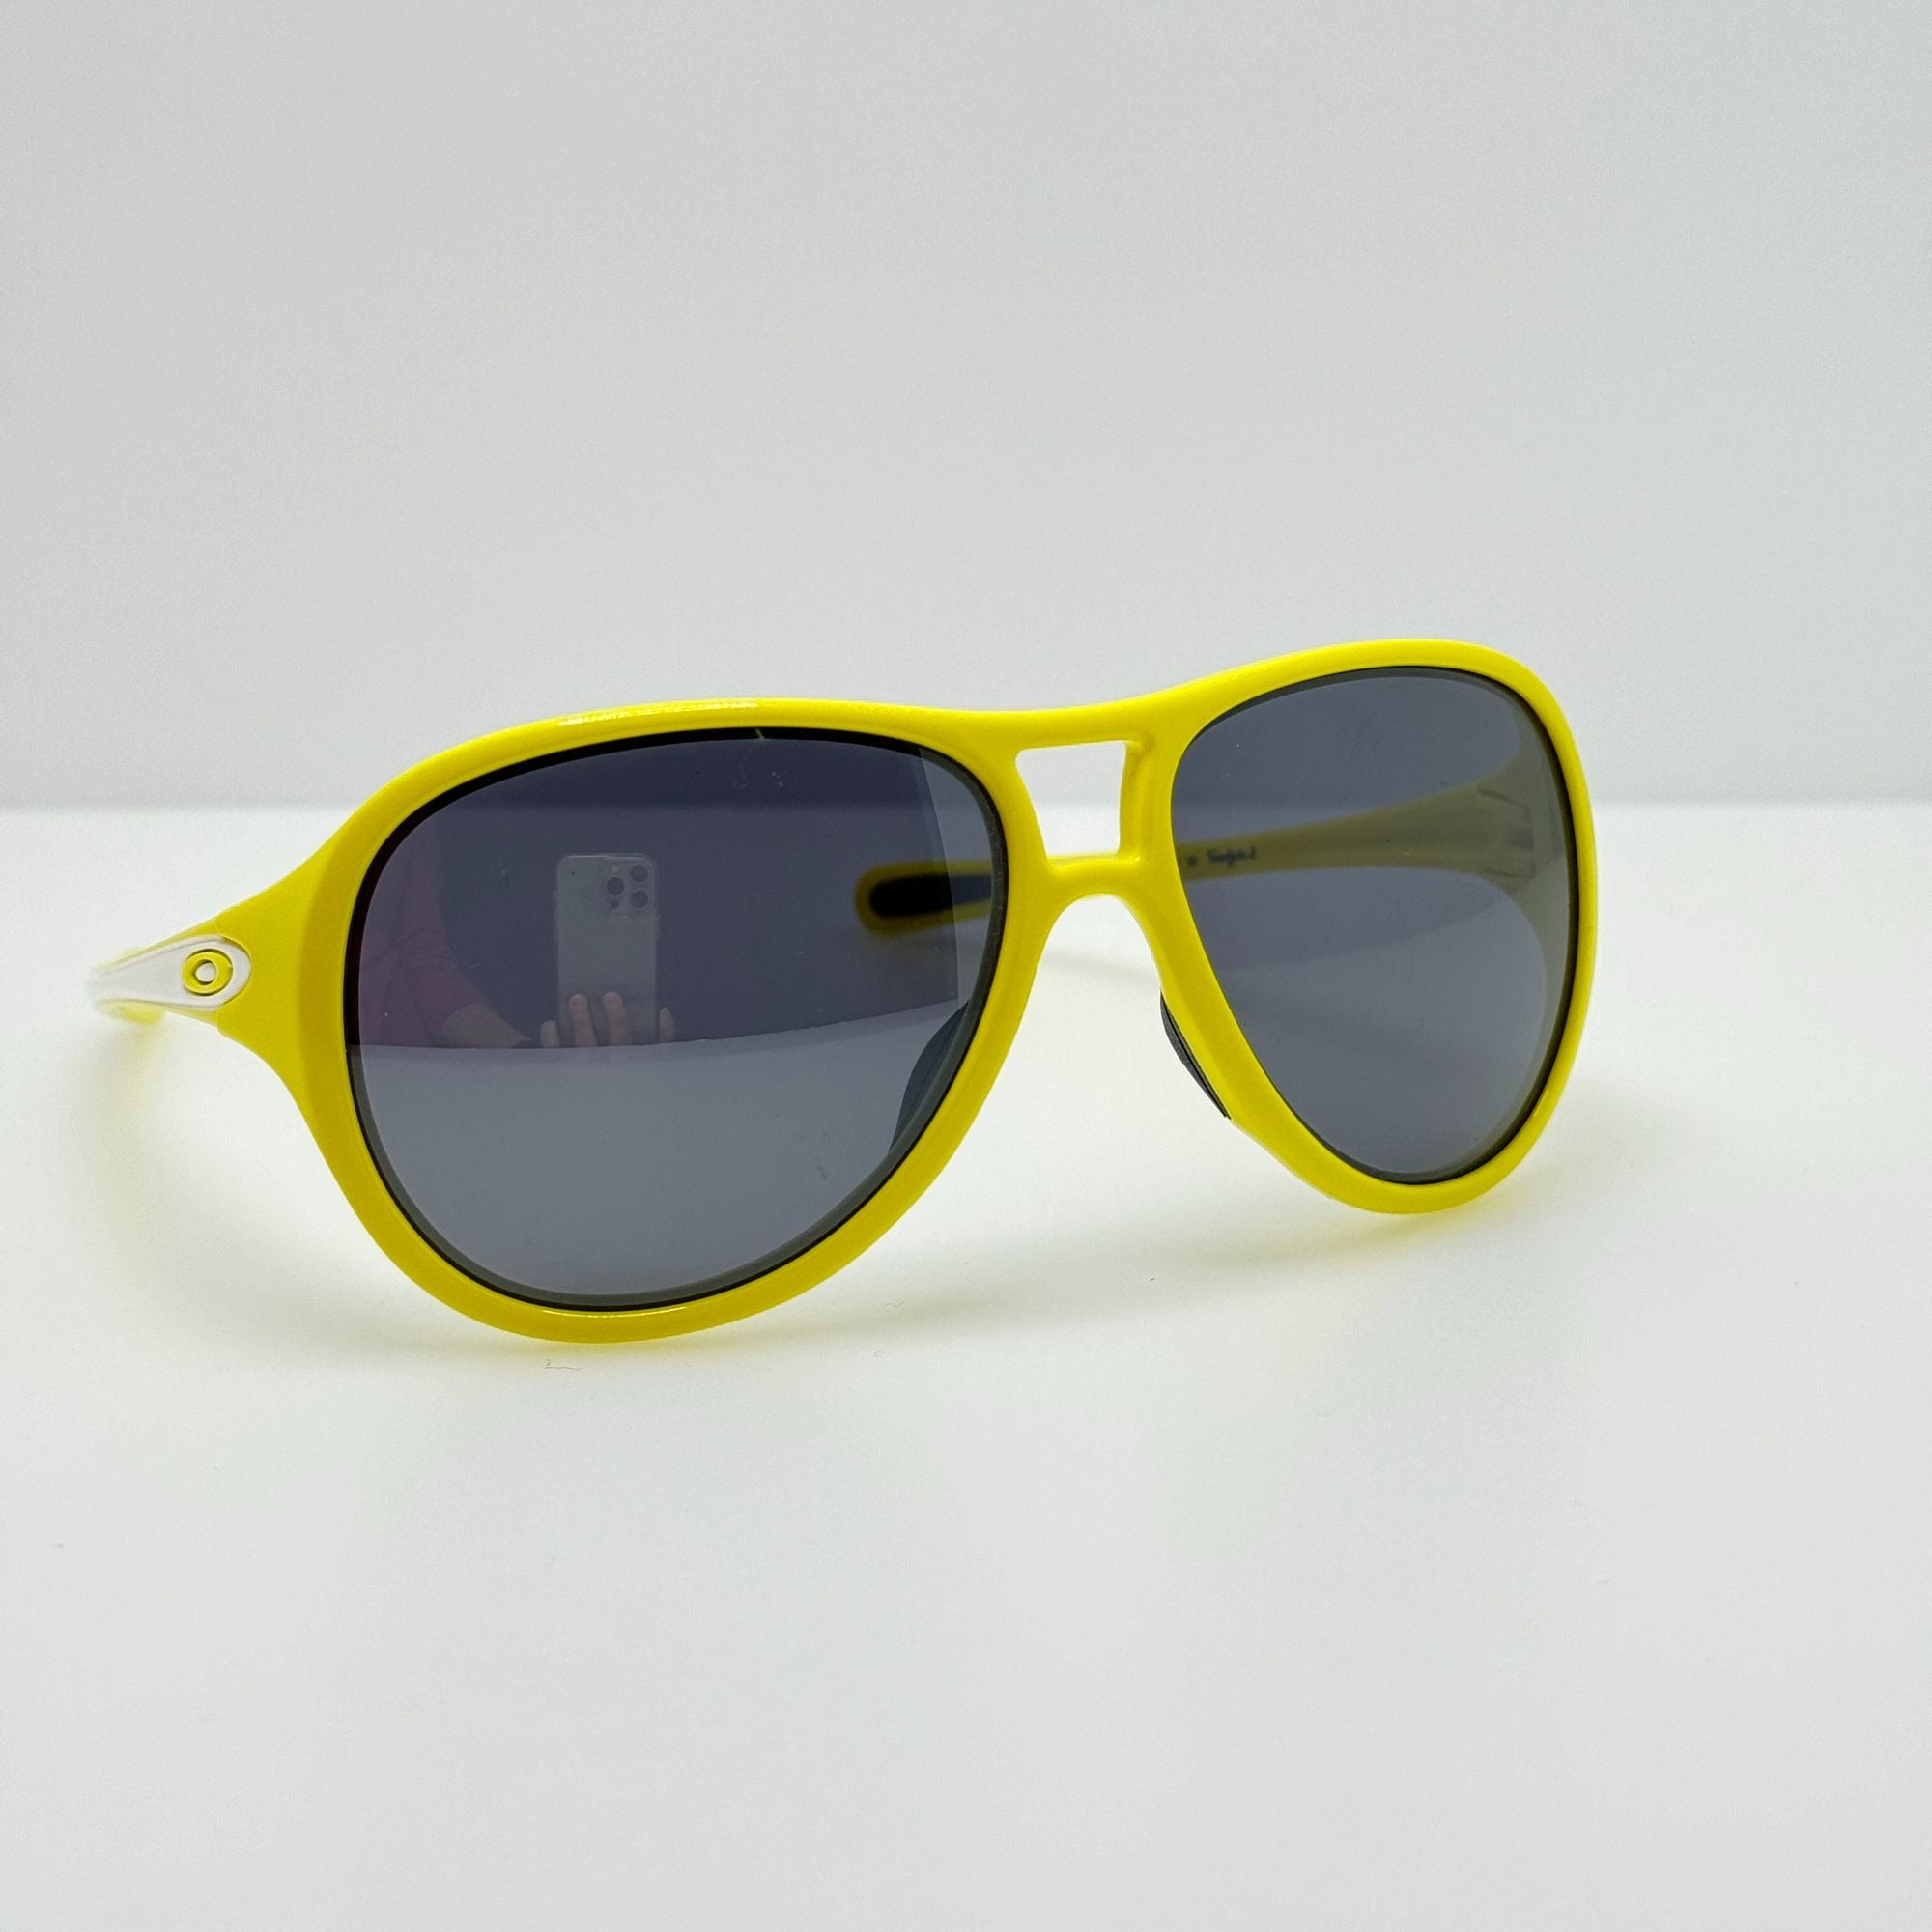 Oakley-Sunglasses-OO9177-15-Twentysix.2-Yellow-59-14-135-Sunglasses